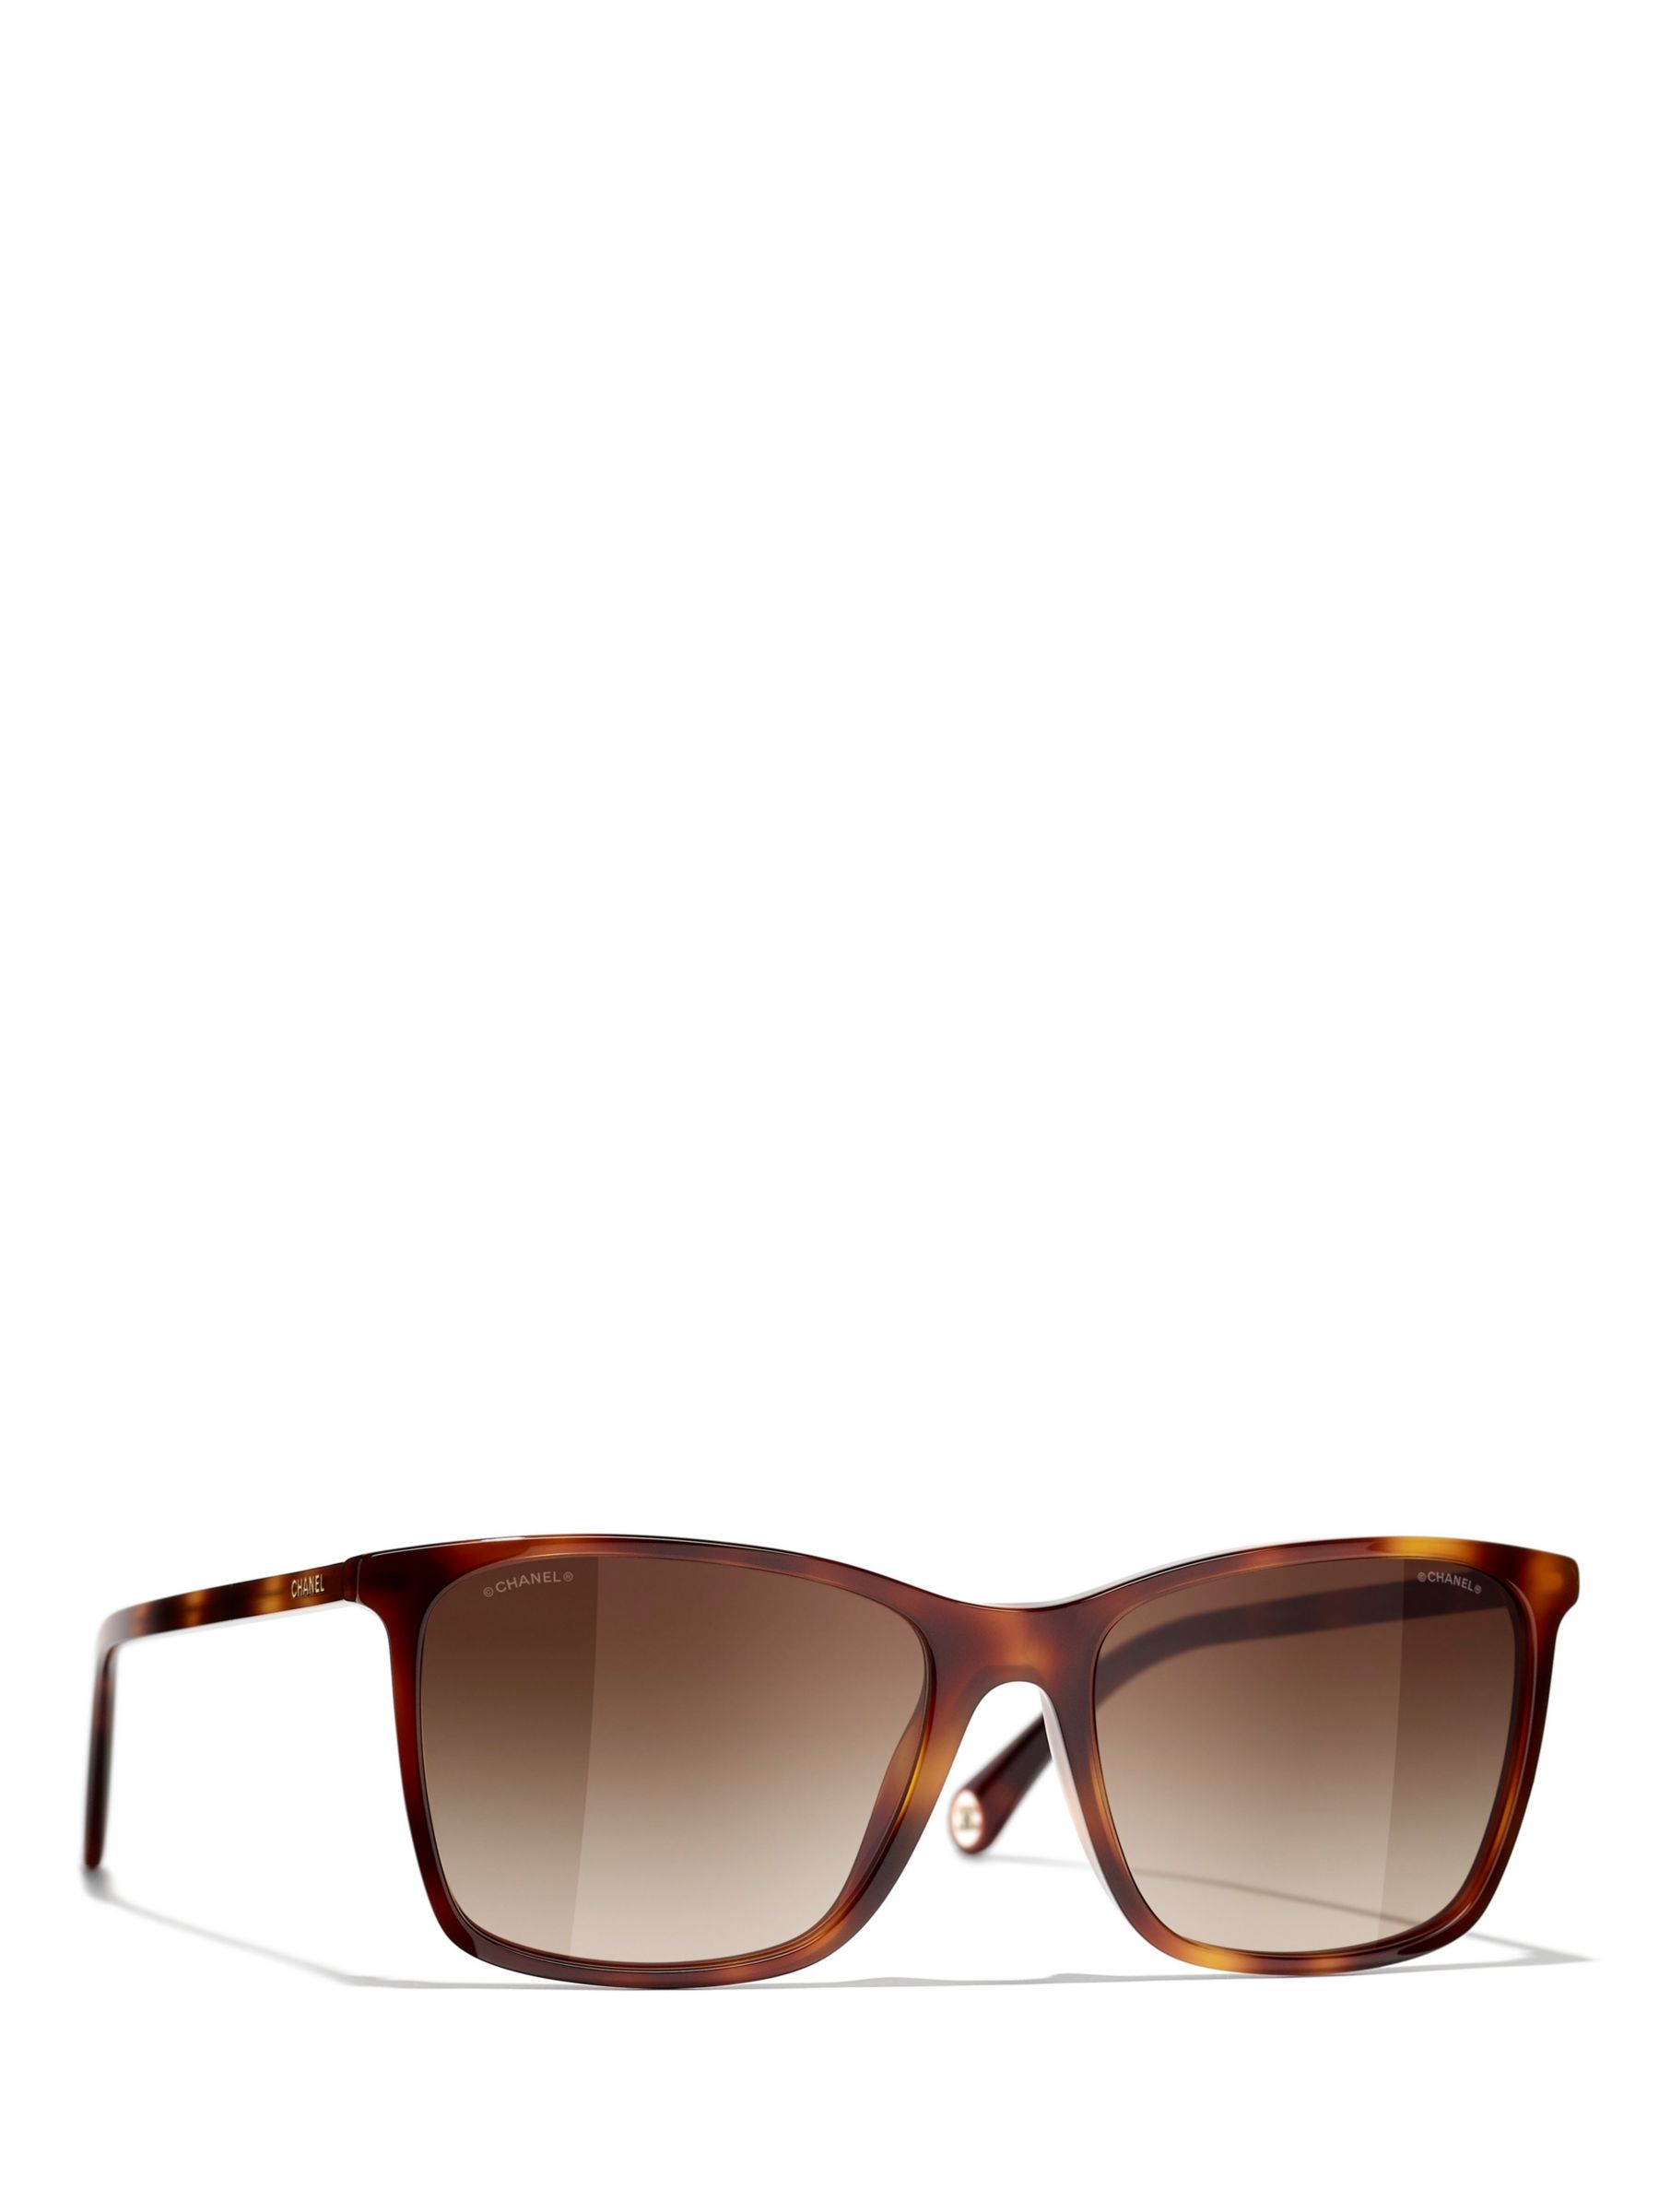 Buy CHANEL Rectangular Sunglasses CH5447 Havana/Brown Gradient Online at johnlewis.com